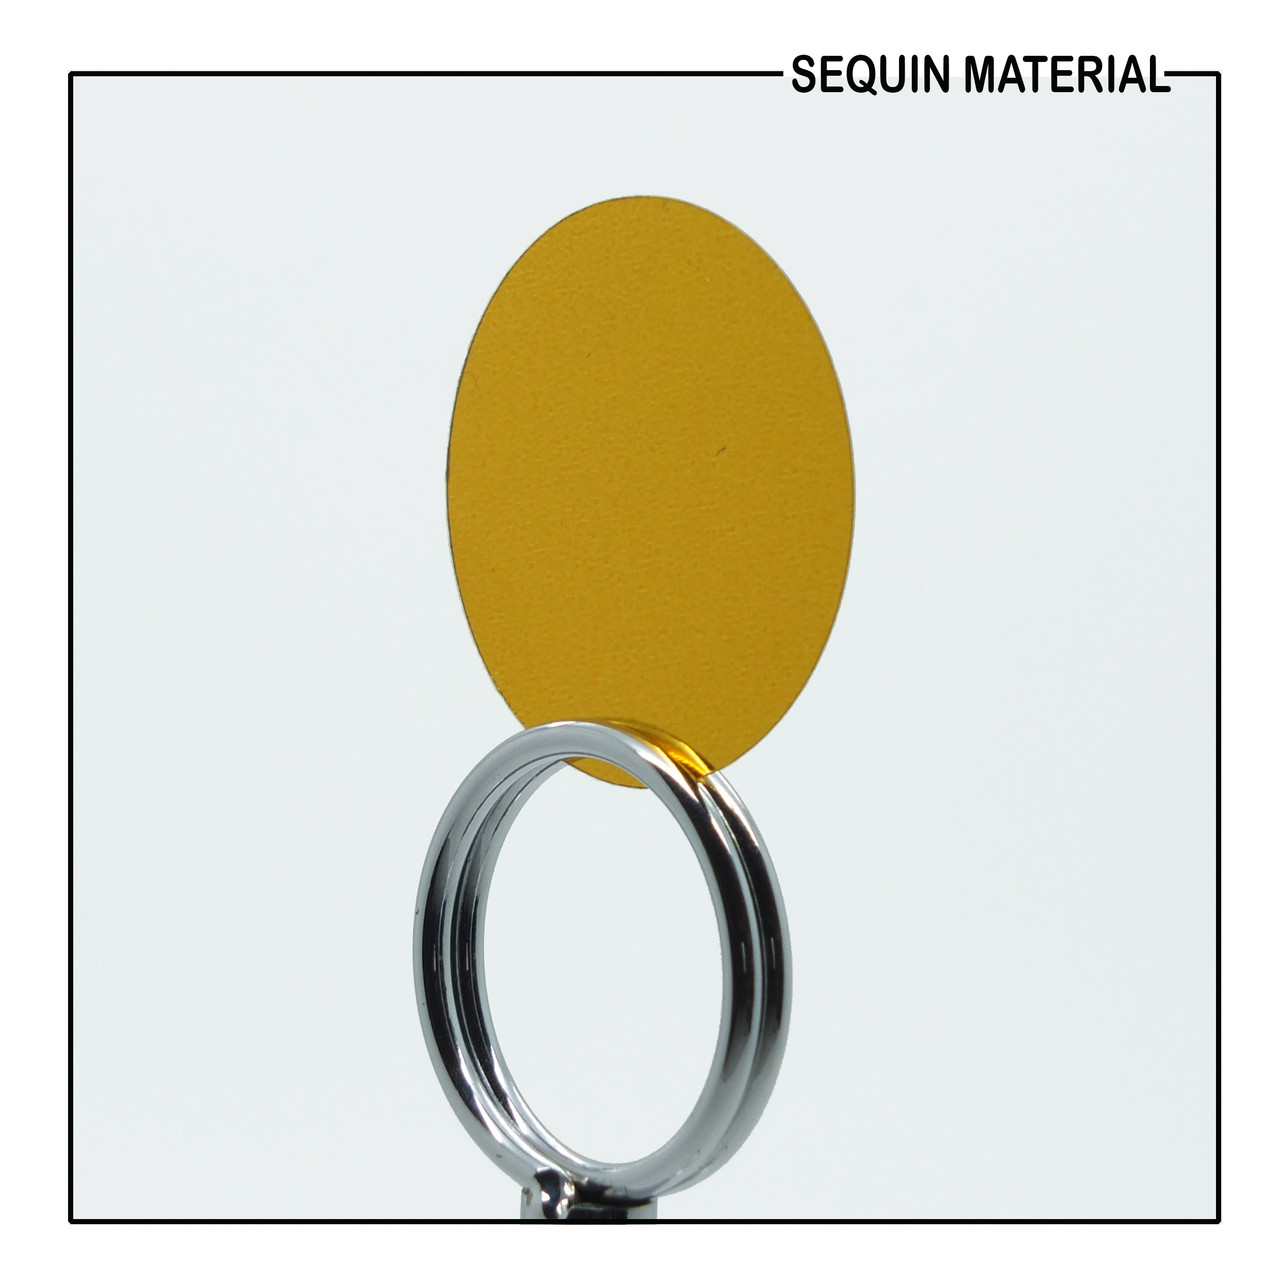 SequinsUSA Brassy Orange Gold Shiny Metallic Sequin Material Film RL345